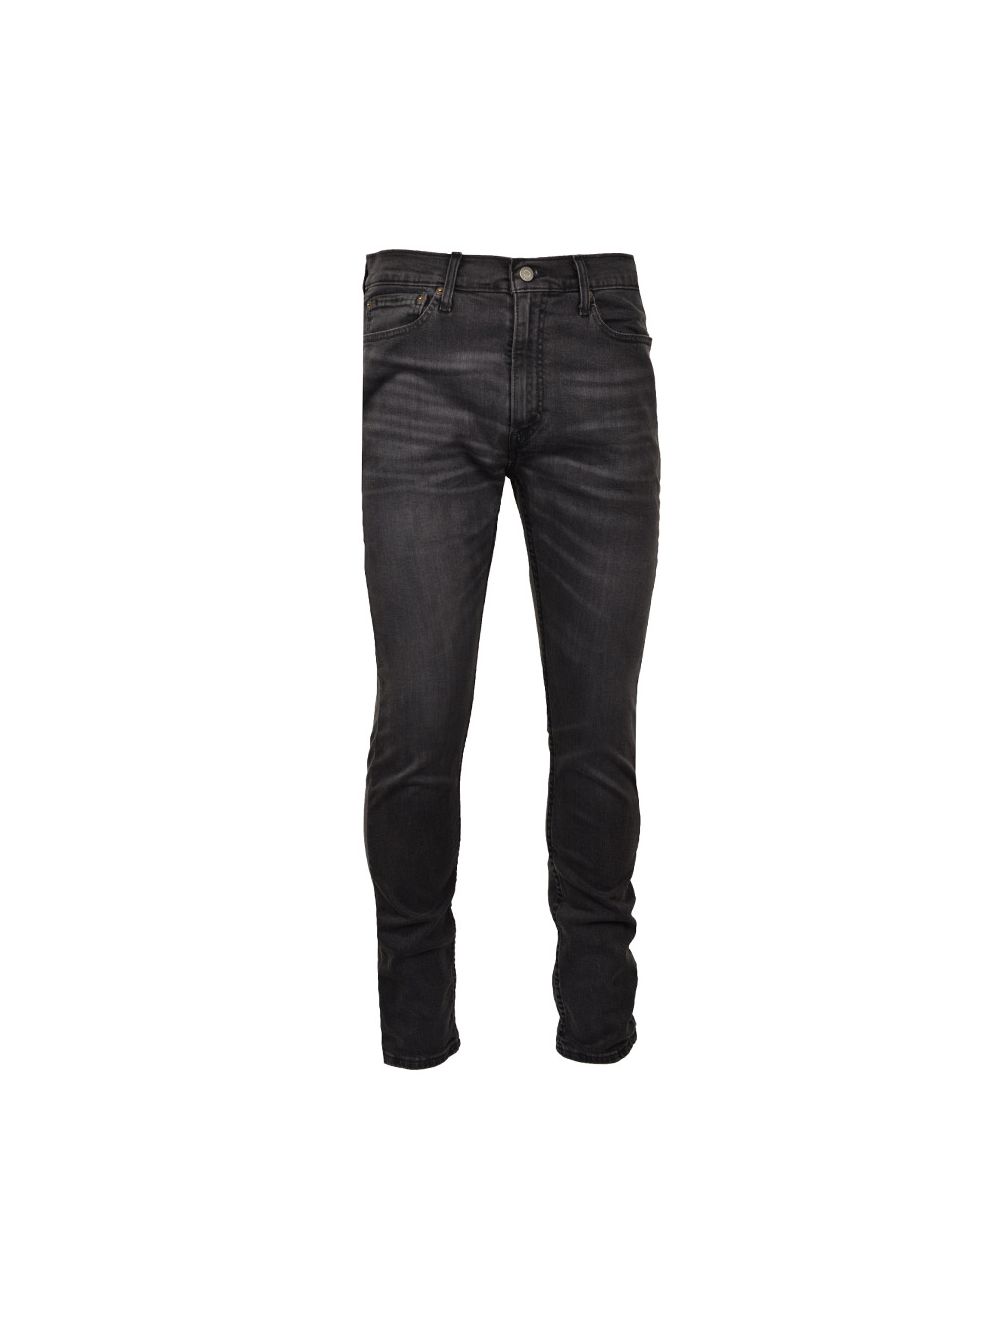 Shop Levi's 510 Skinny Fit Jeans Mens Black | Studio 88